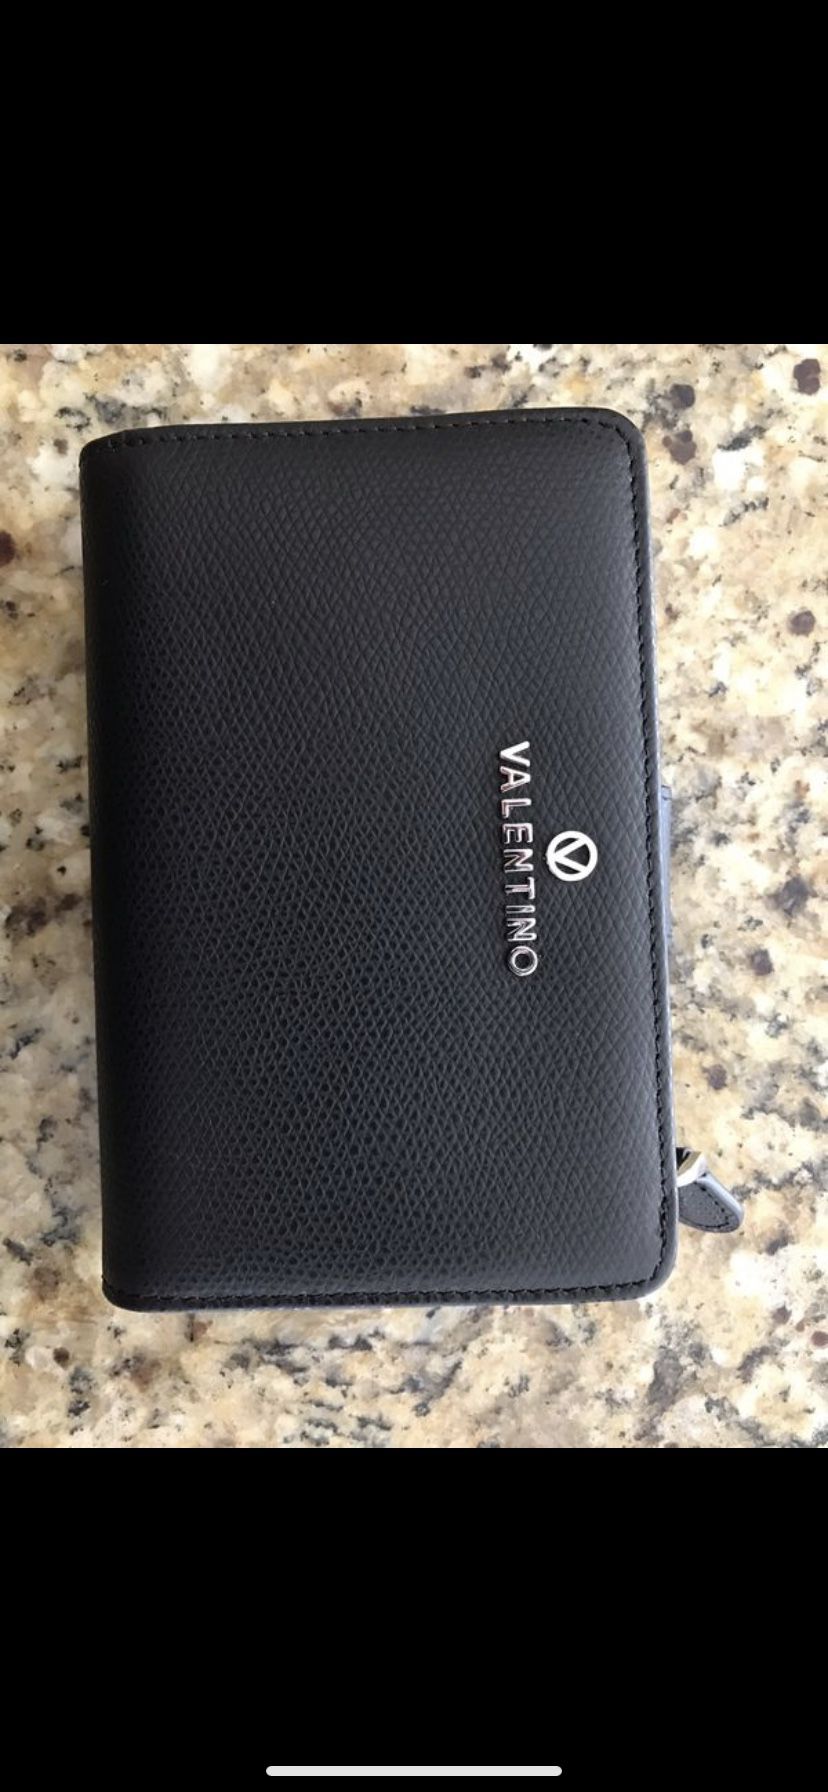 Valentino wallet